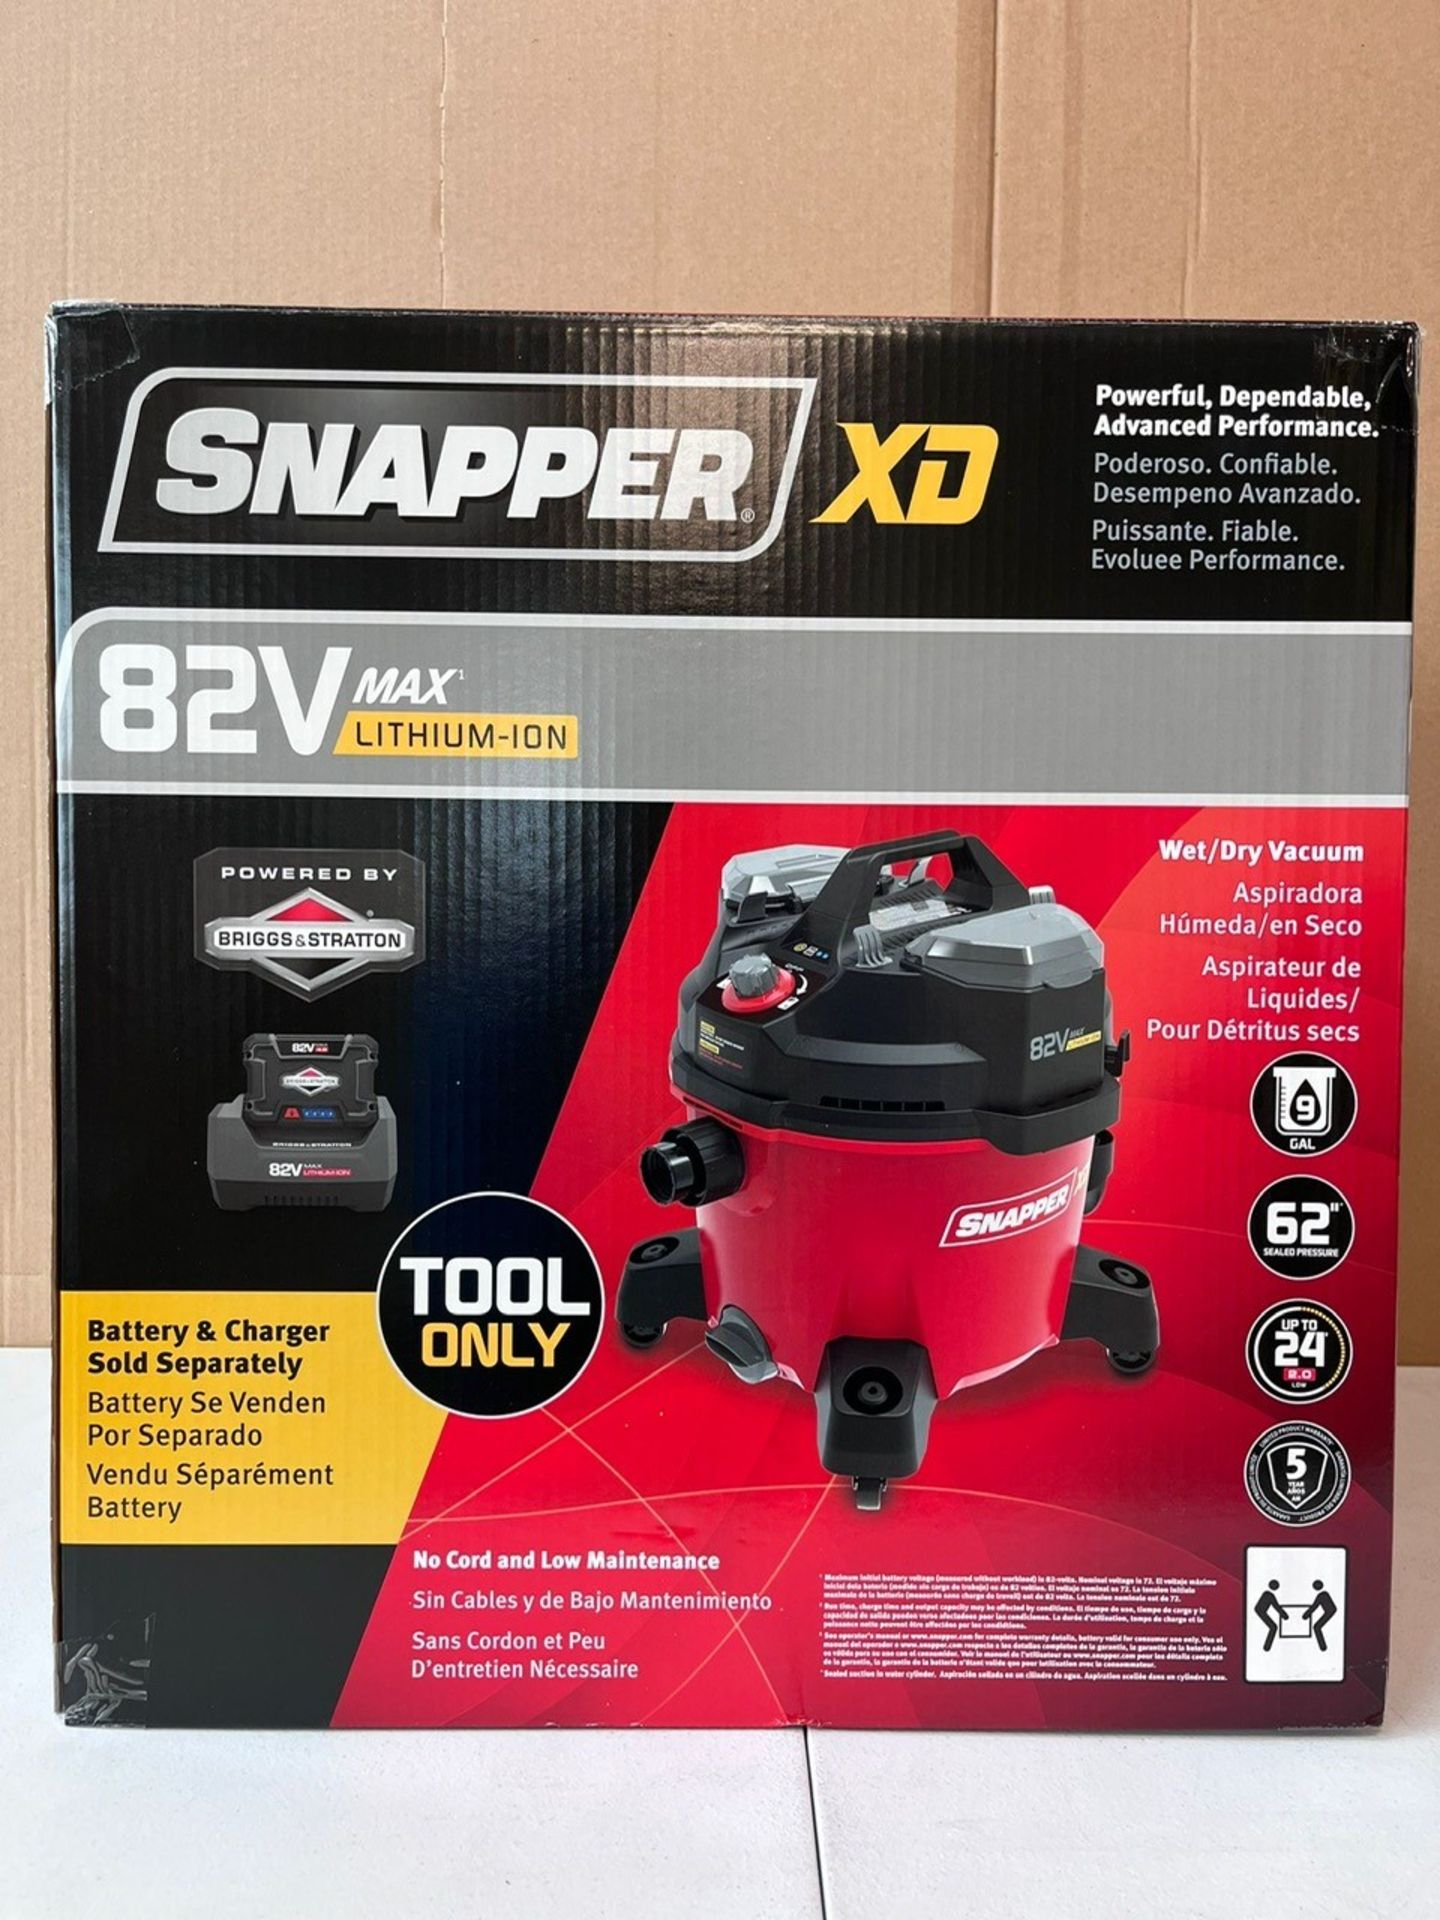 Snapper Xd - 82V Wet/Dry Vac - Battery Not Included - Sxdwsv82 - Image 2 of 3